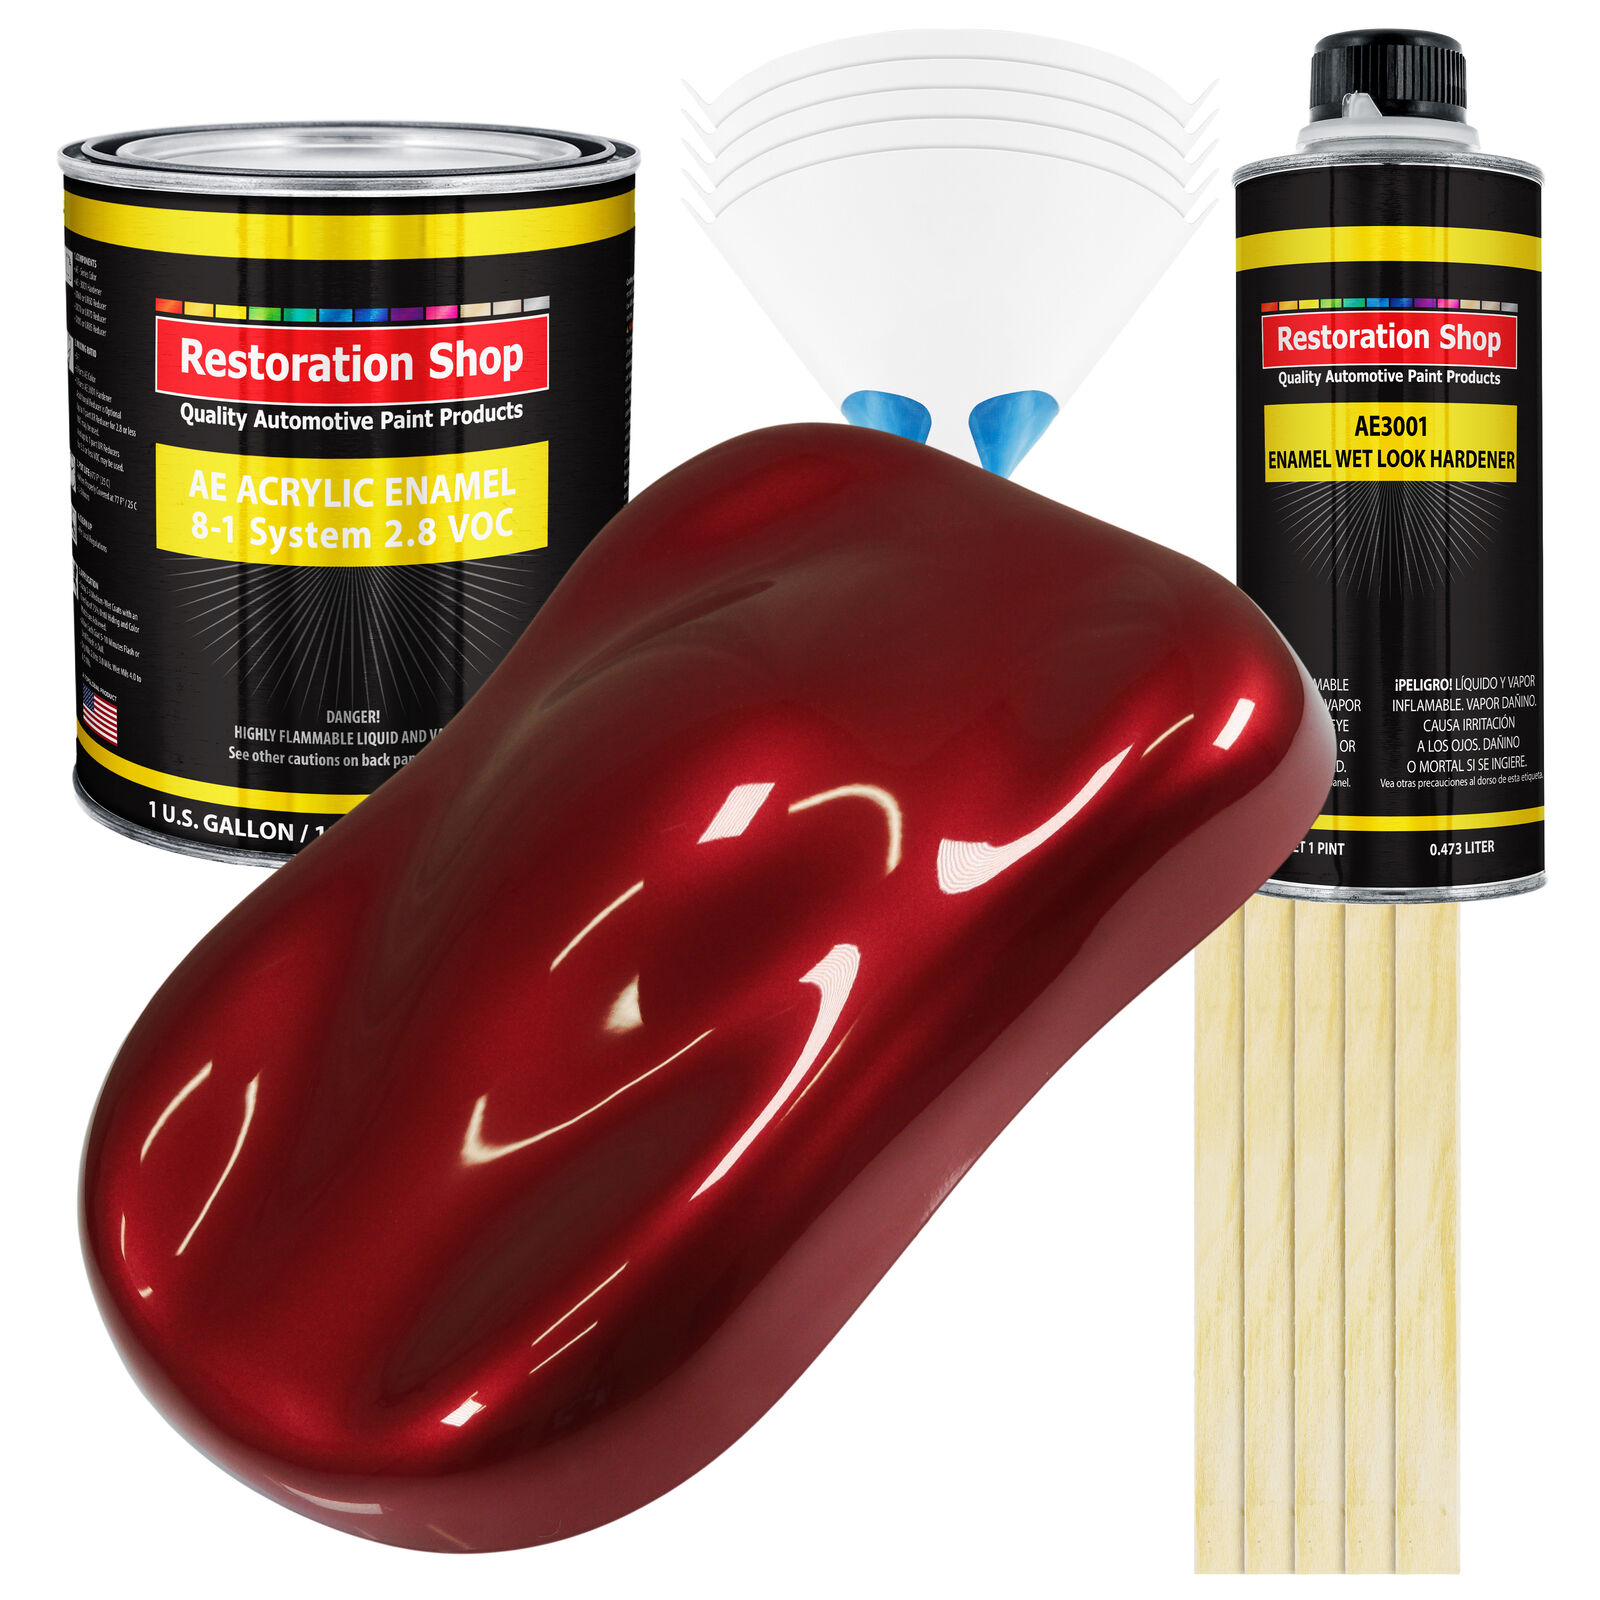 Restoration Shop Fire Red Pearl Acrylic Enamel Gallon Kit, Auto Paint